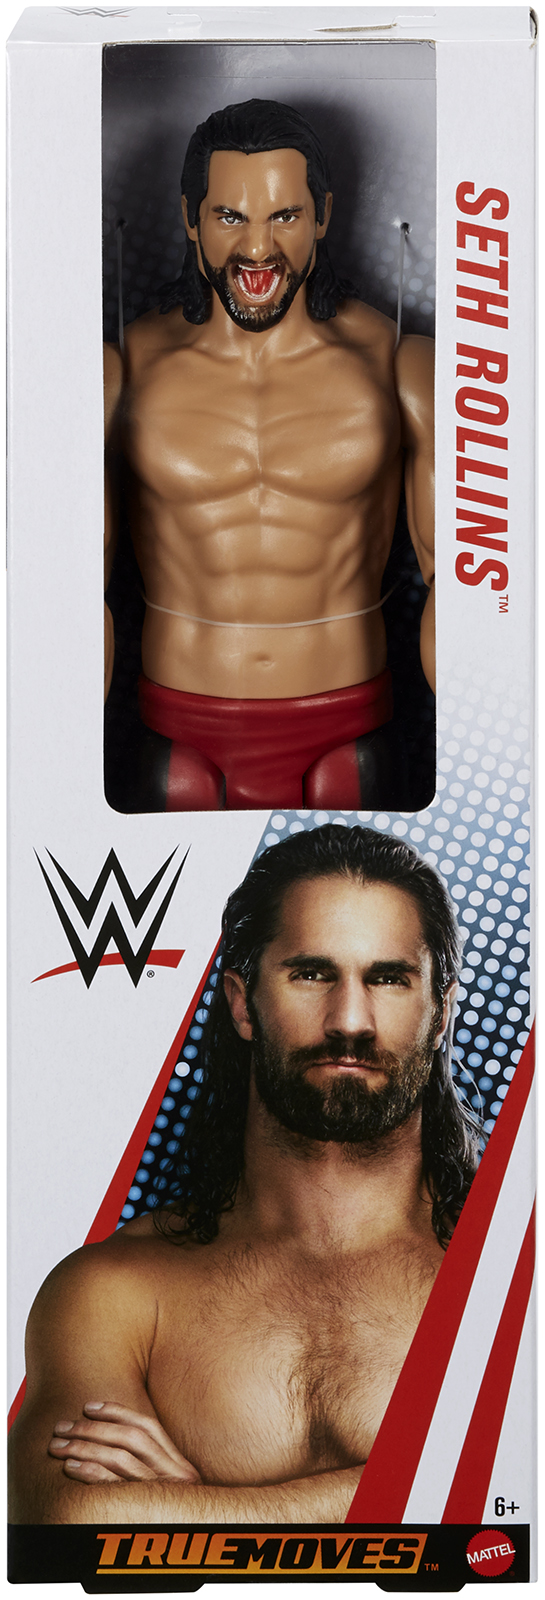 Seth Rollins - WWE True Moves (12 Inch Figure) WWE Toy Wrestling